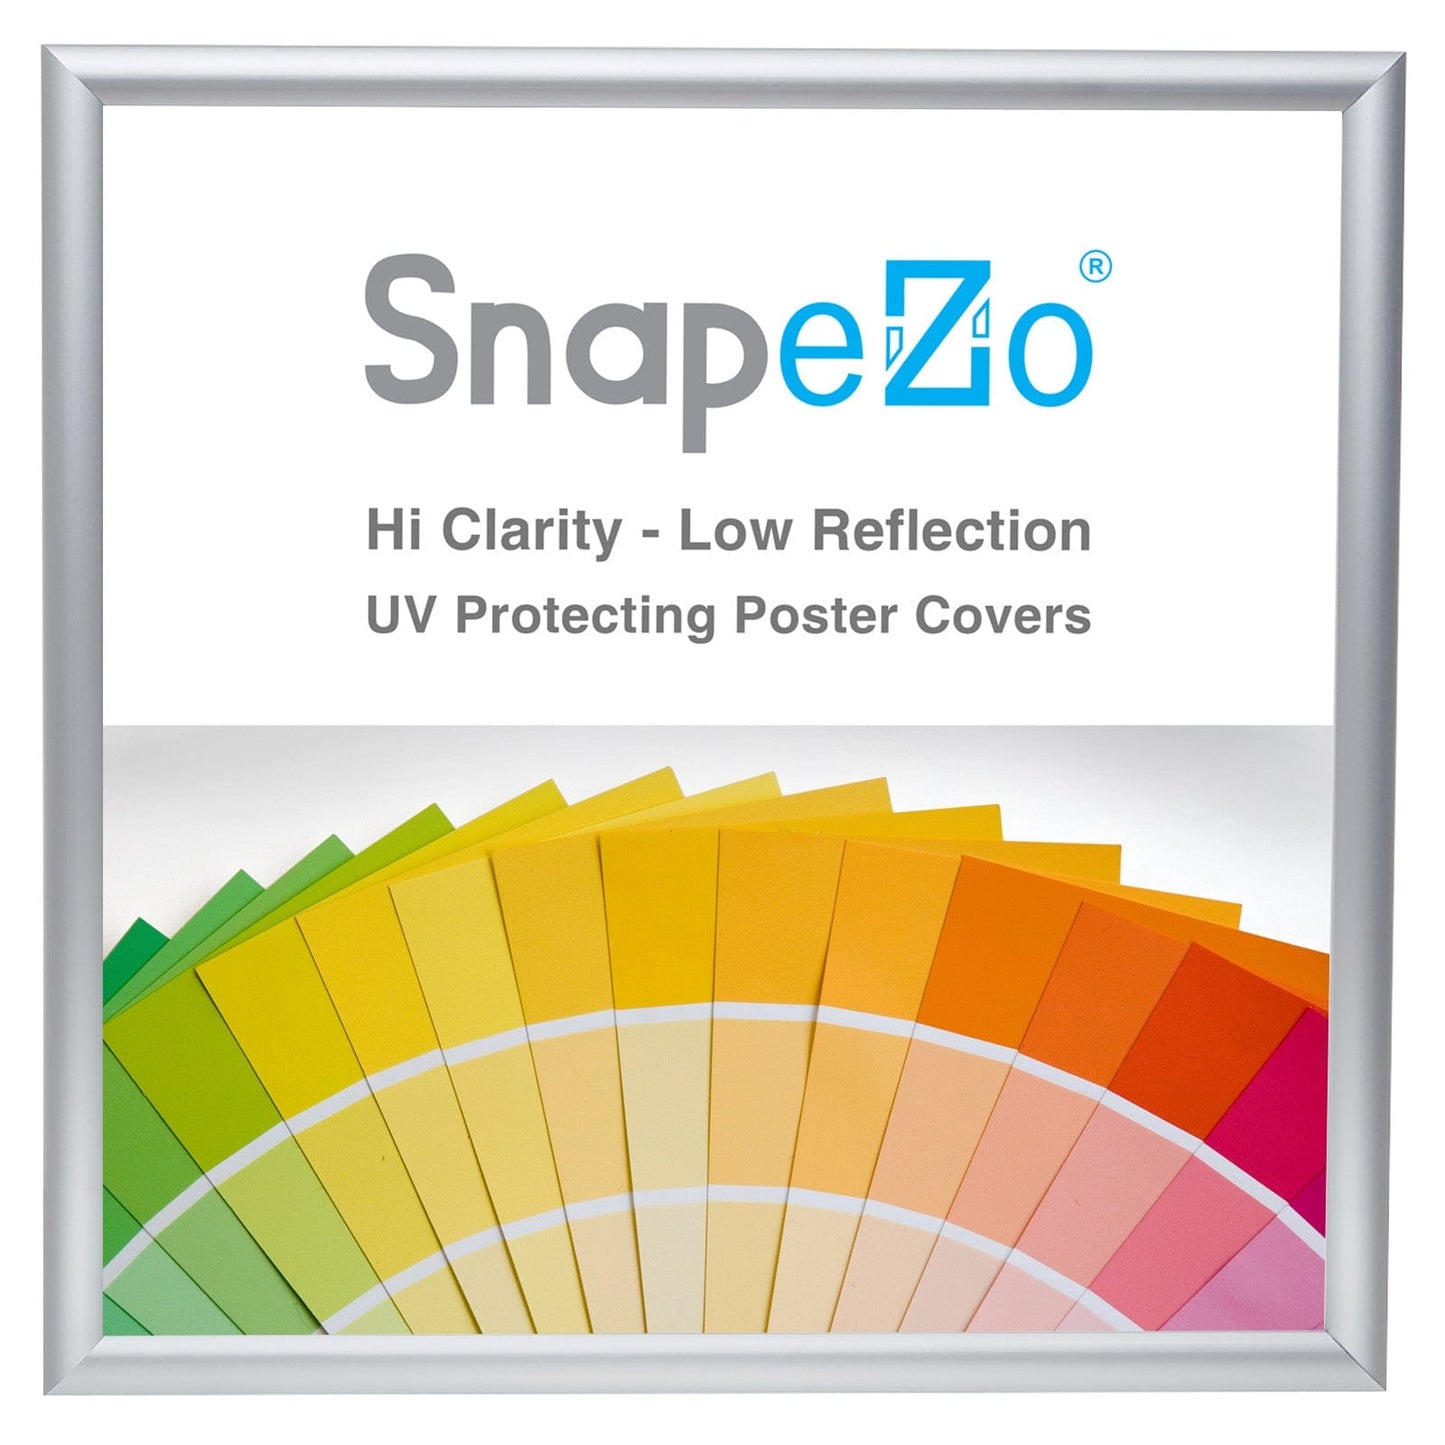 24x24 Silver SnapeZo® Snap Frame - 1" Profile - Snap Frames Direct